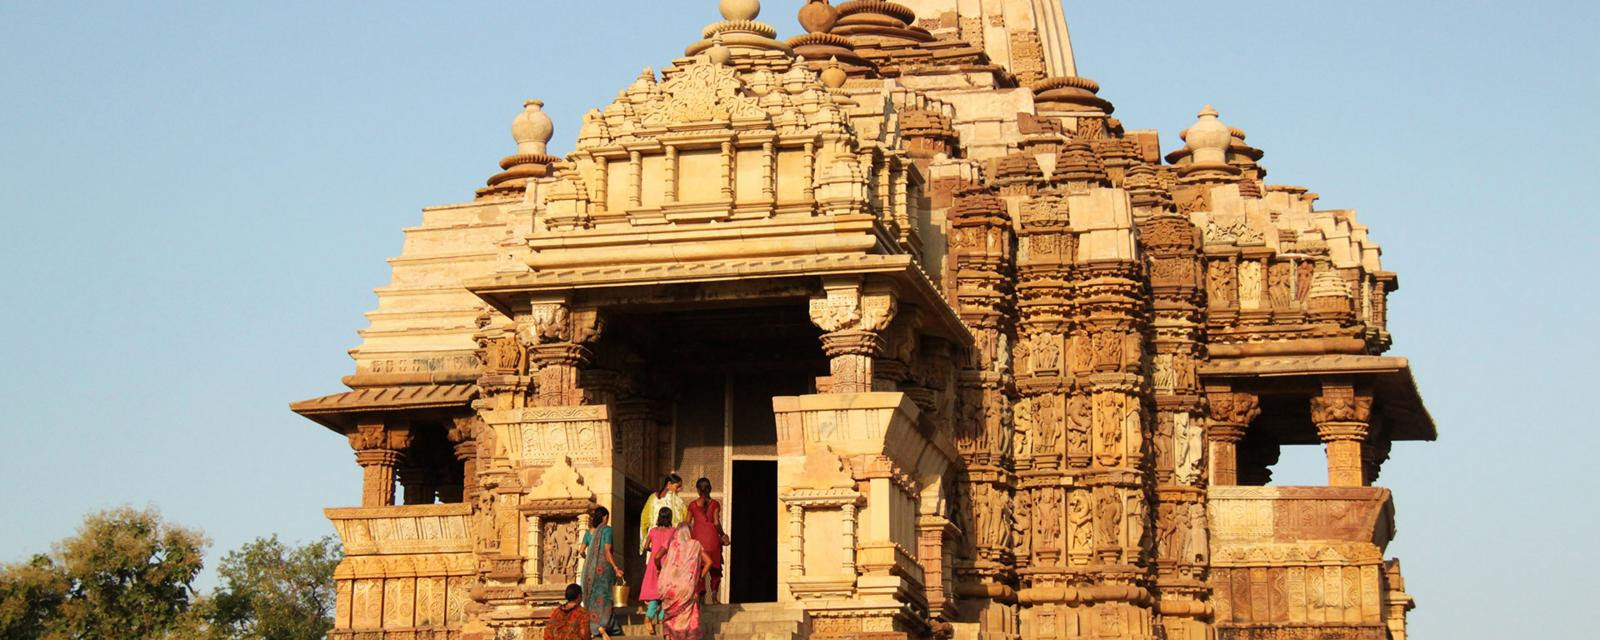 Of the original 85 temples, just more than 20 remain, Khajuraho, Madhya Pradesh, India (Credit: Credit: Charukesi Ramadurai)